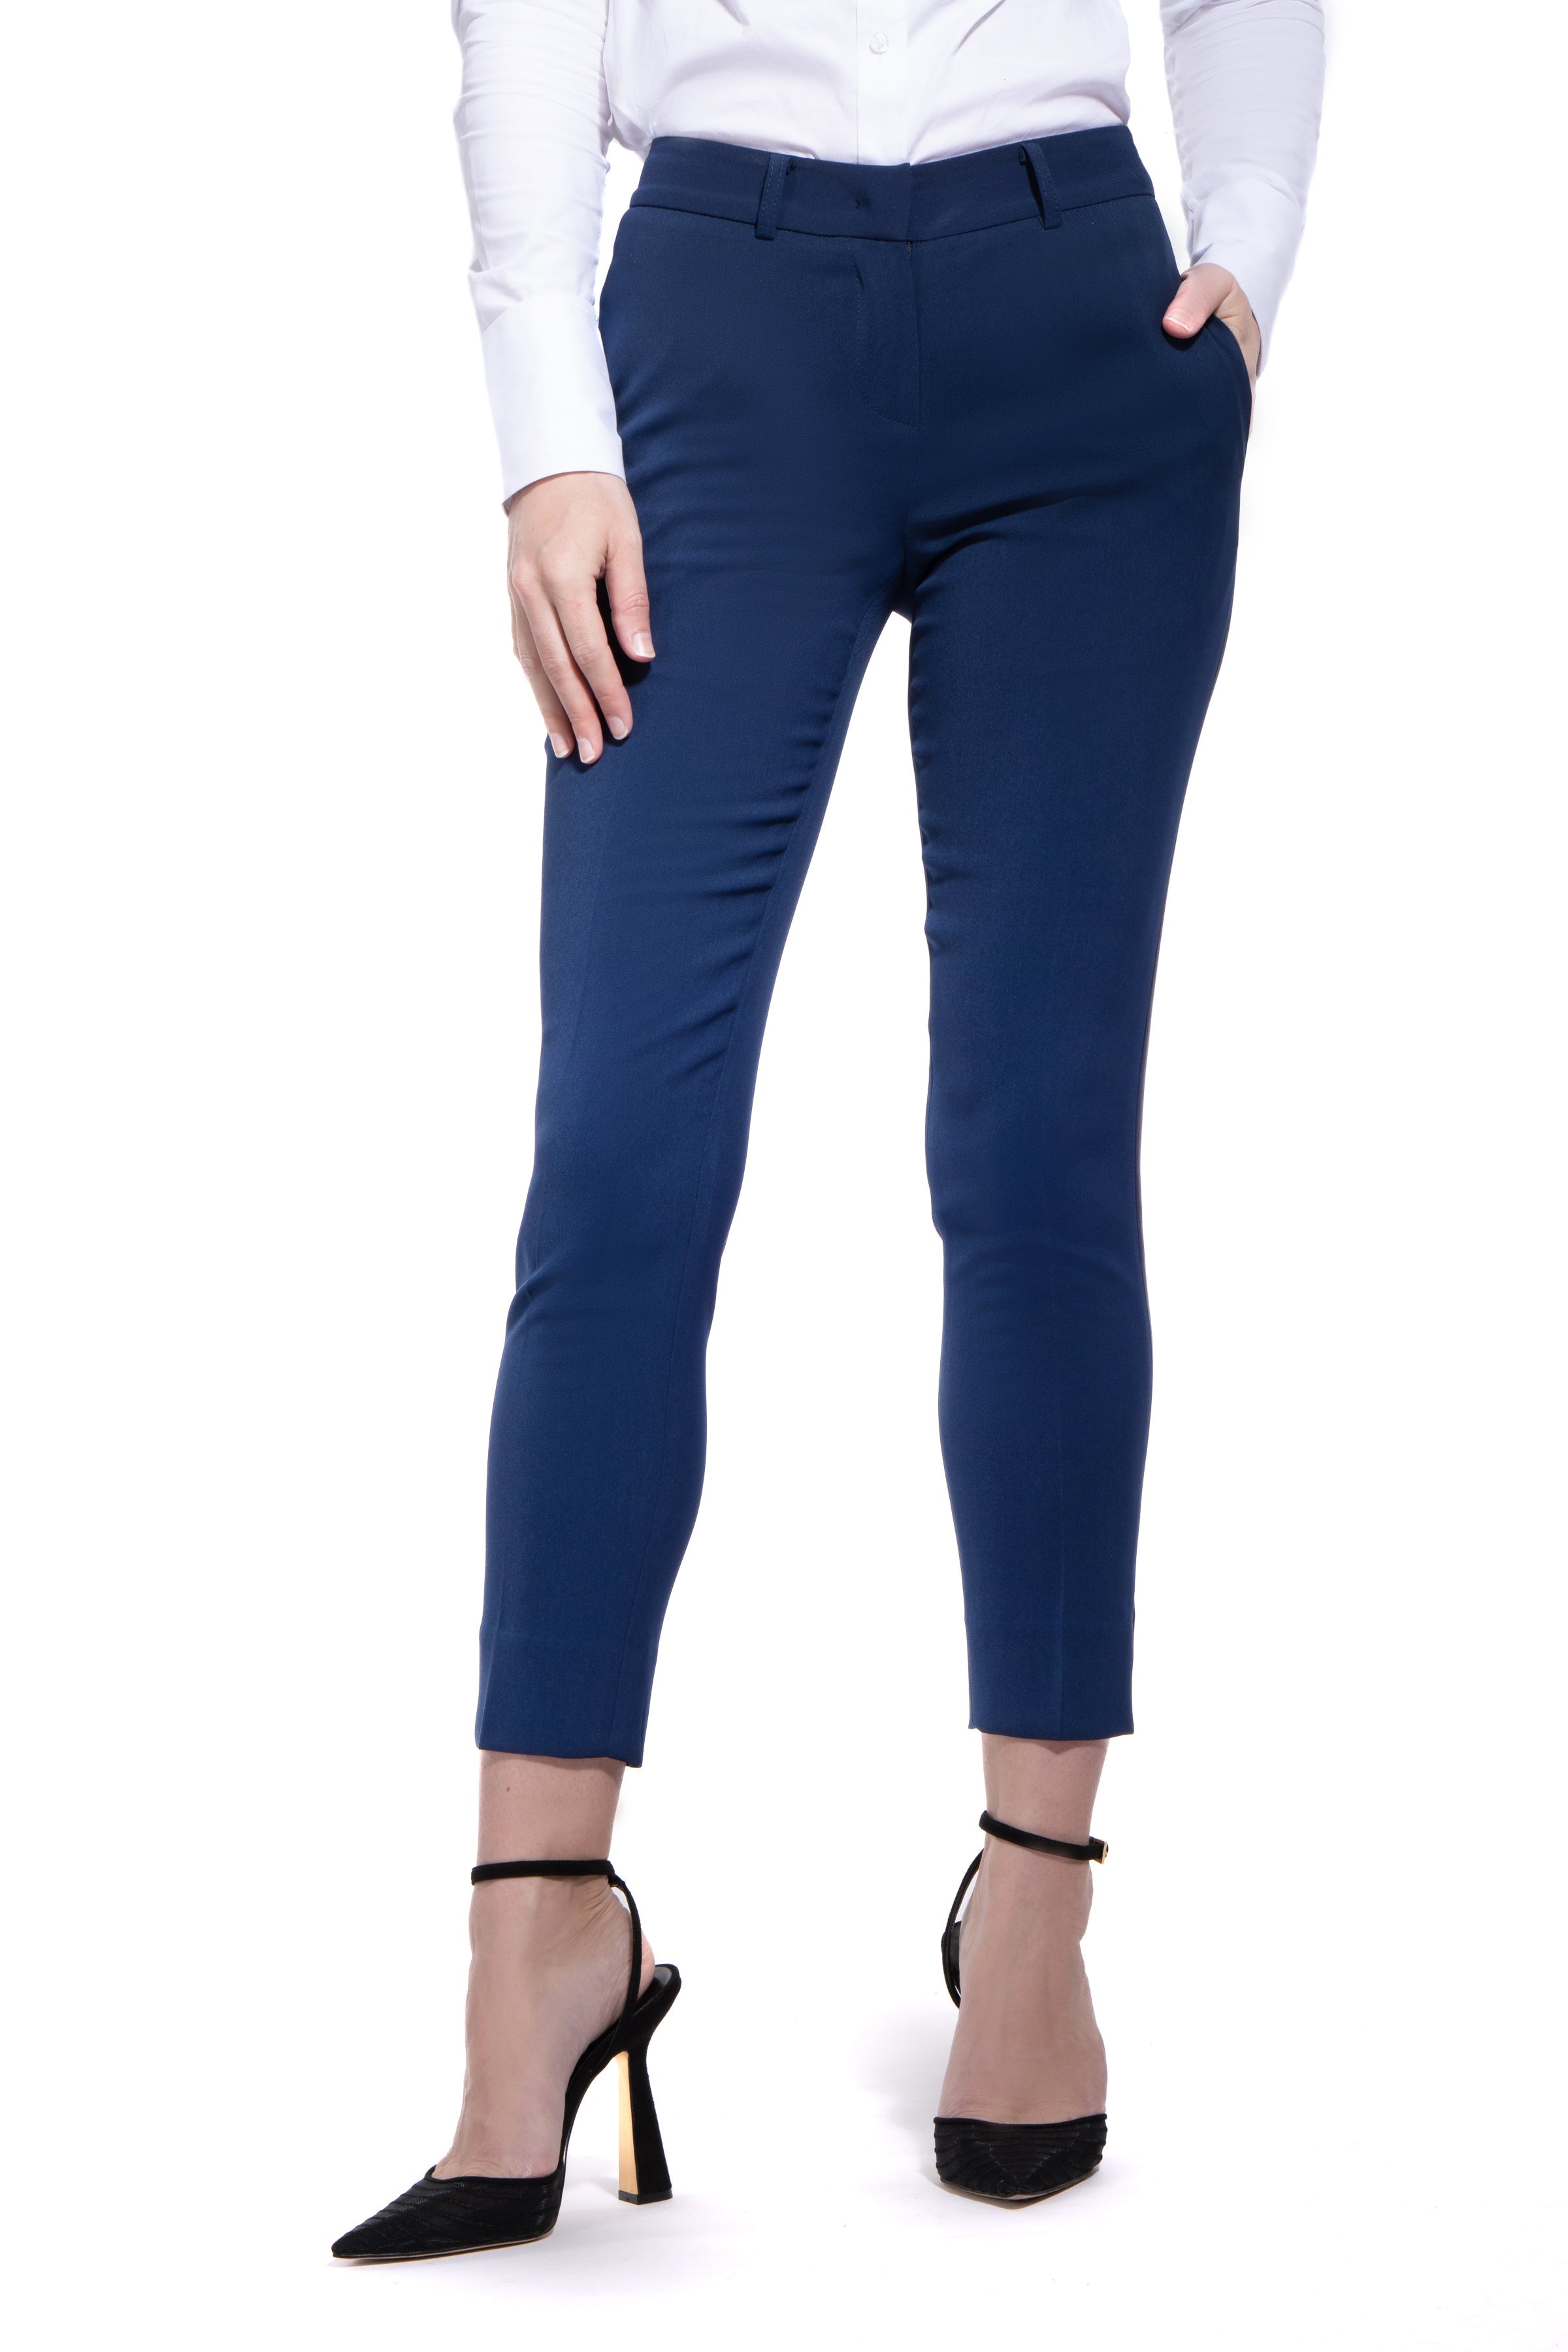 Brioni - Navy Blue Wool Slim Fit Dress Pant | Mitchell Stores